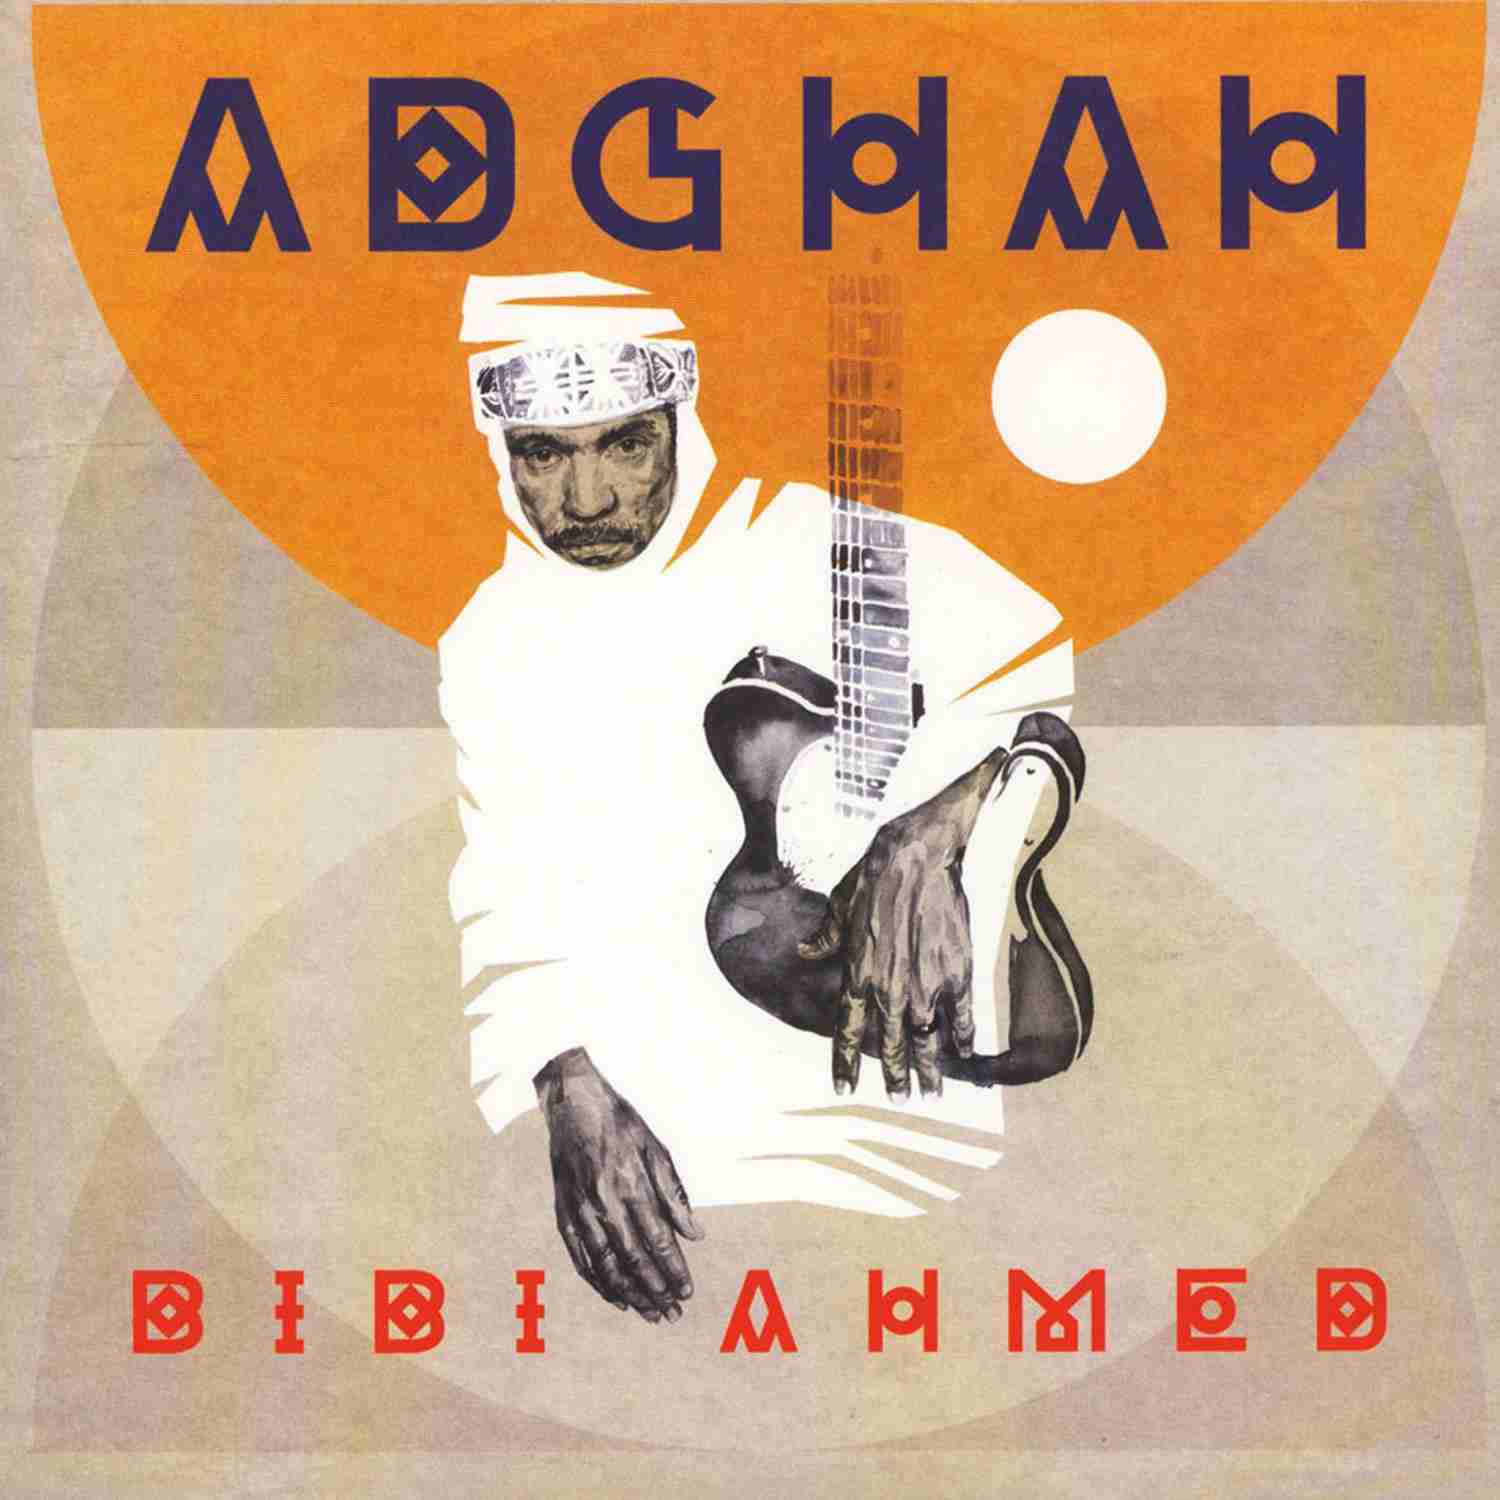 Schallplatte Bibi Ahmed – A Cocas / I Midi Wall und Bibi Ahmed – Adghah (Sounds Of Subterrania) im Test, Bild 3